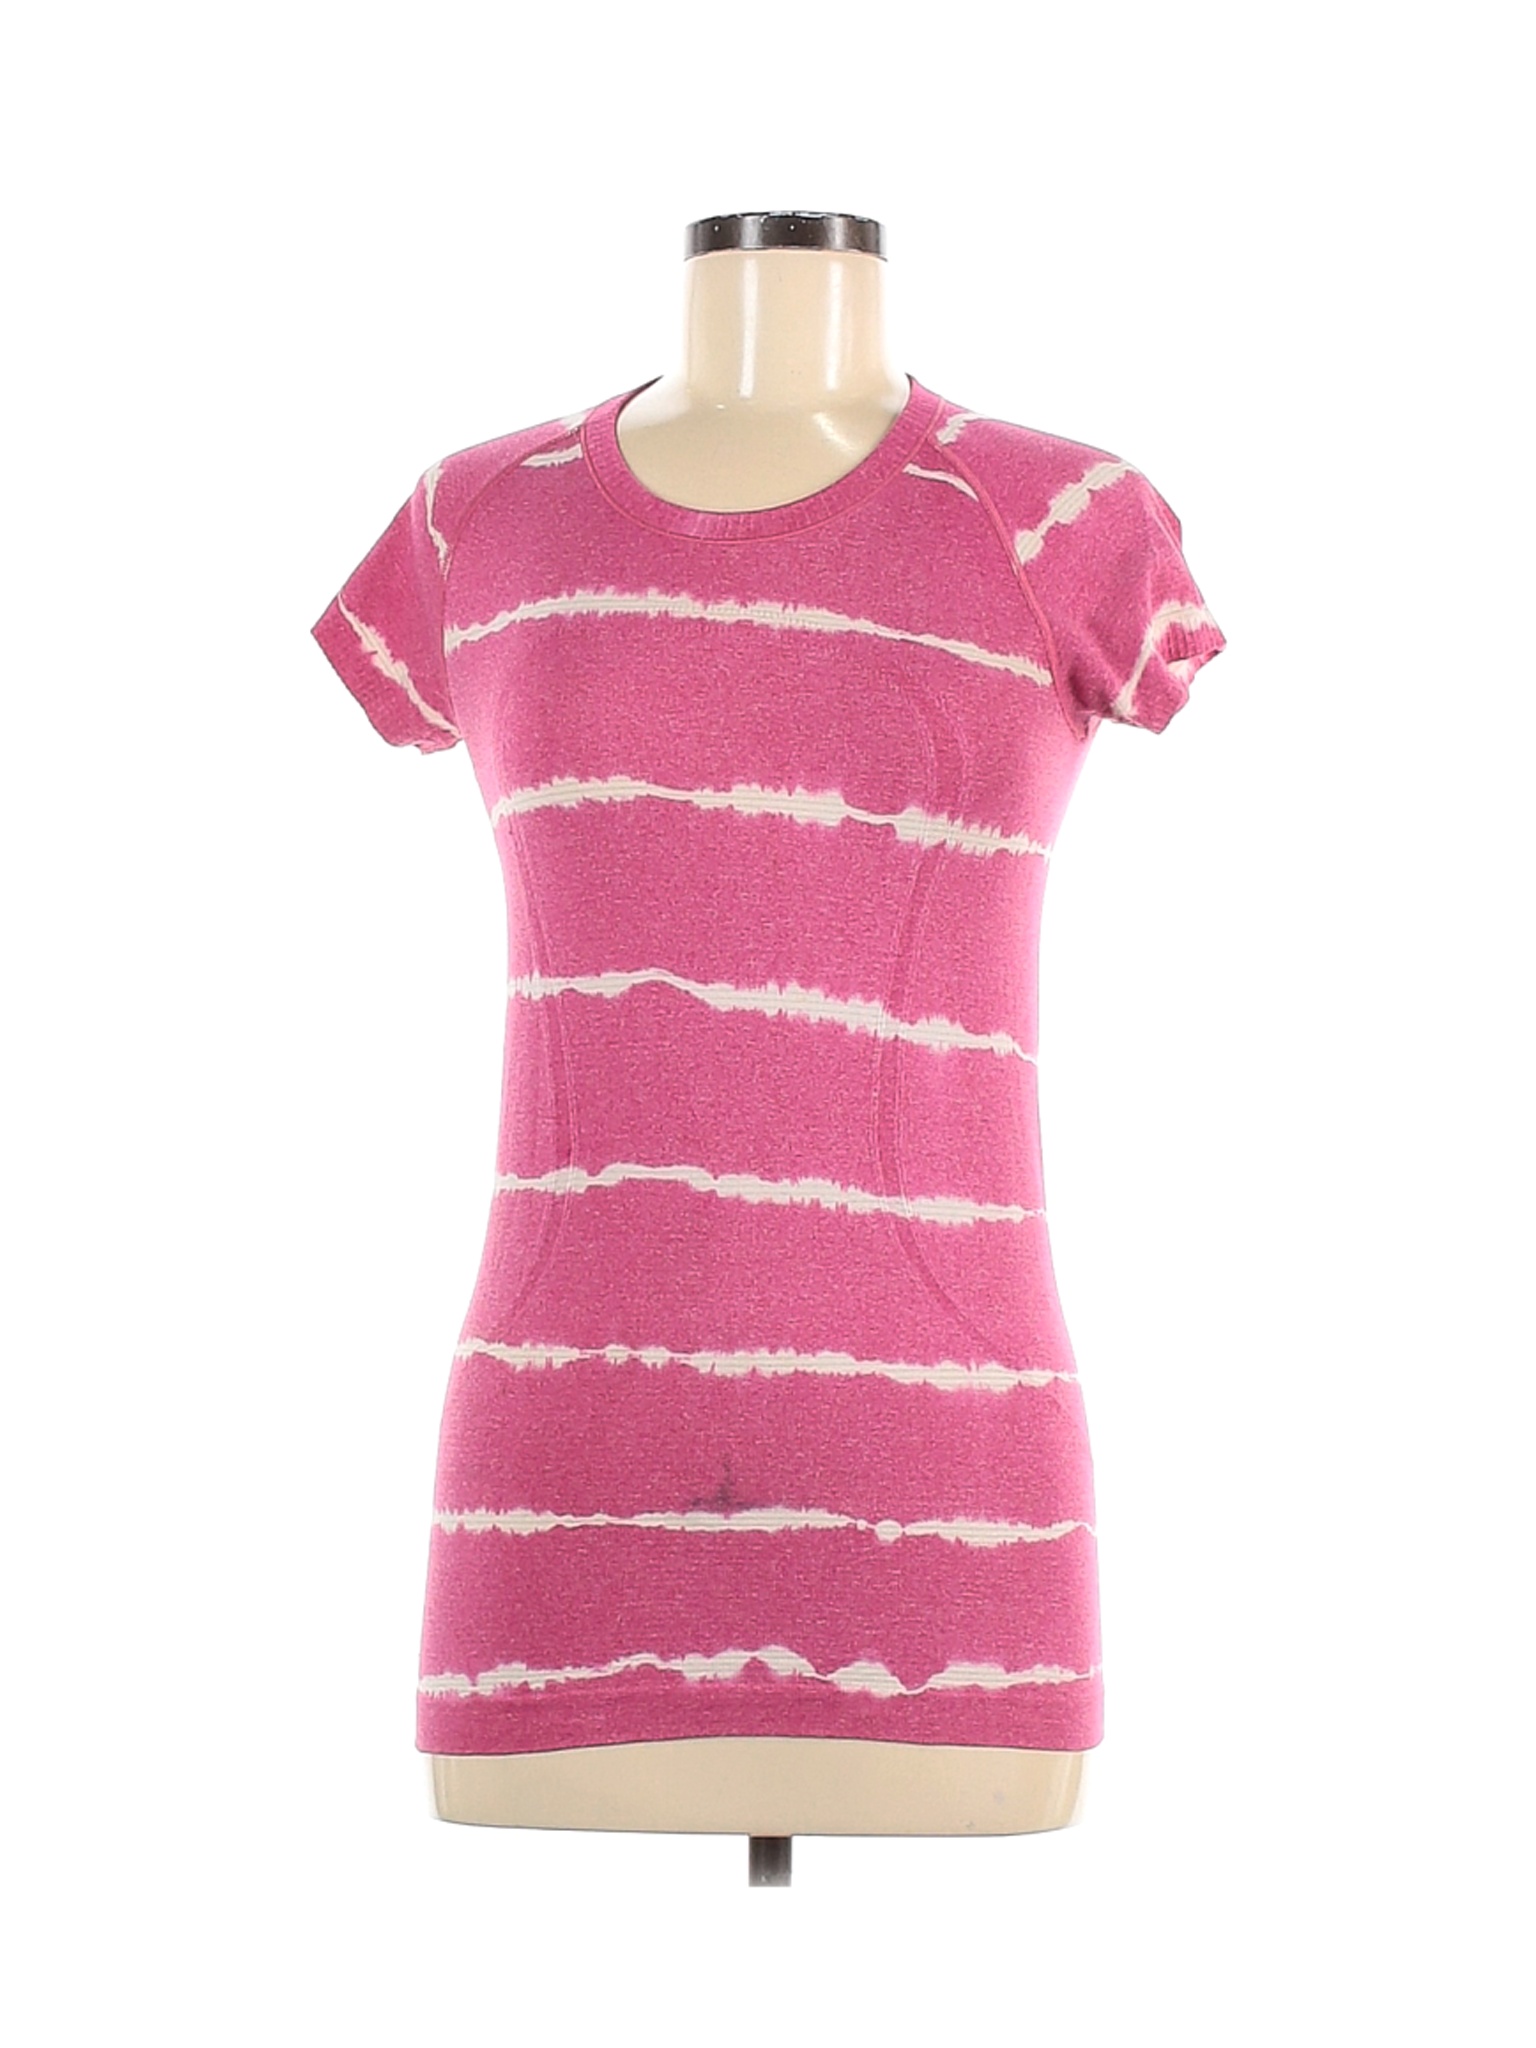 Lululemon Athletica Women Pink Active T-Shirt 6 | eBay